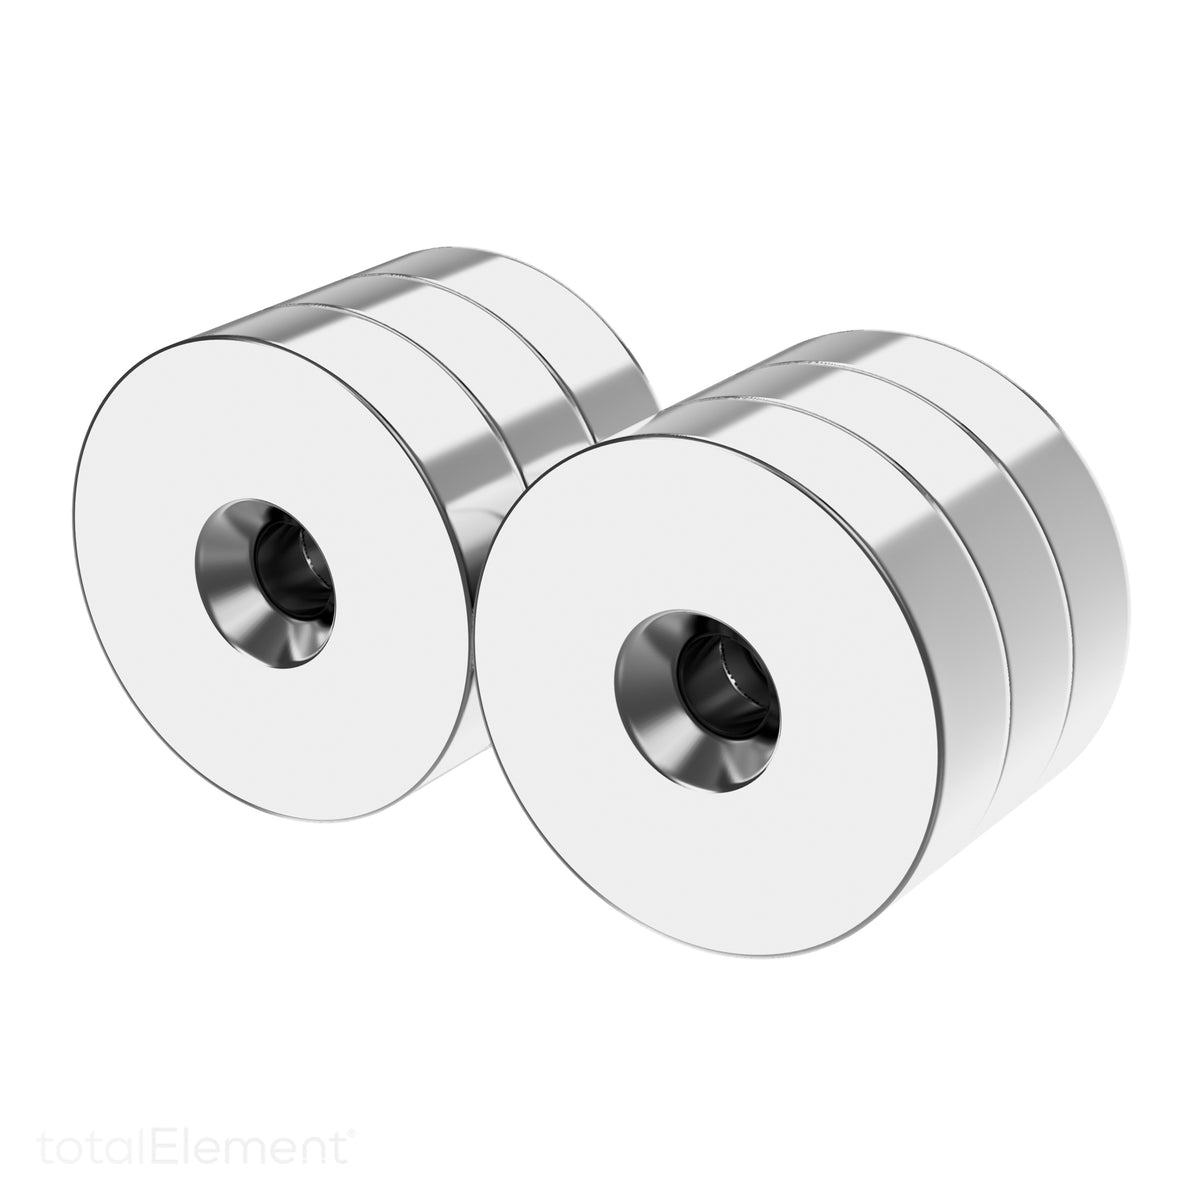 40 LB Strong Neodymium Magnetic Hooks - Set of 4 - Powerful Magnet